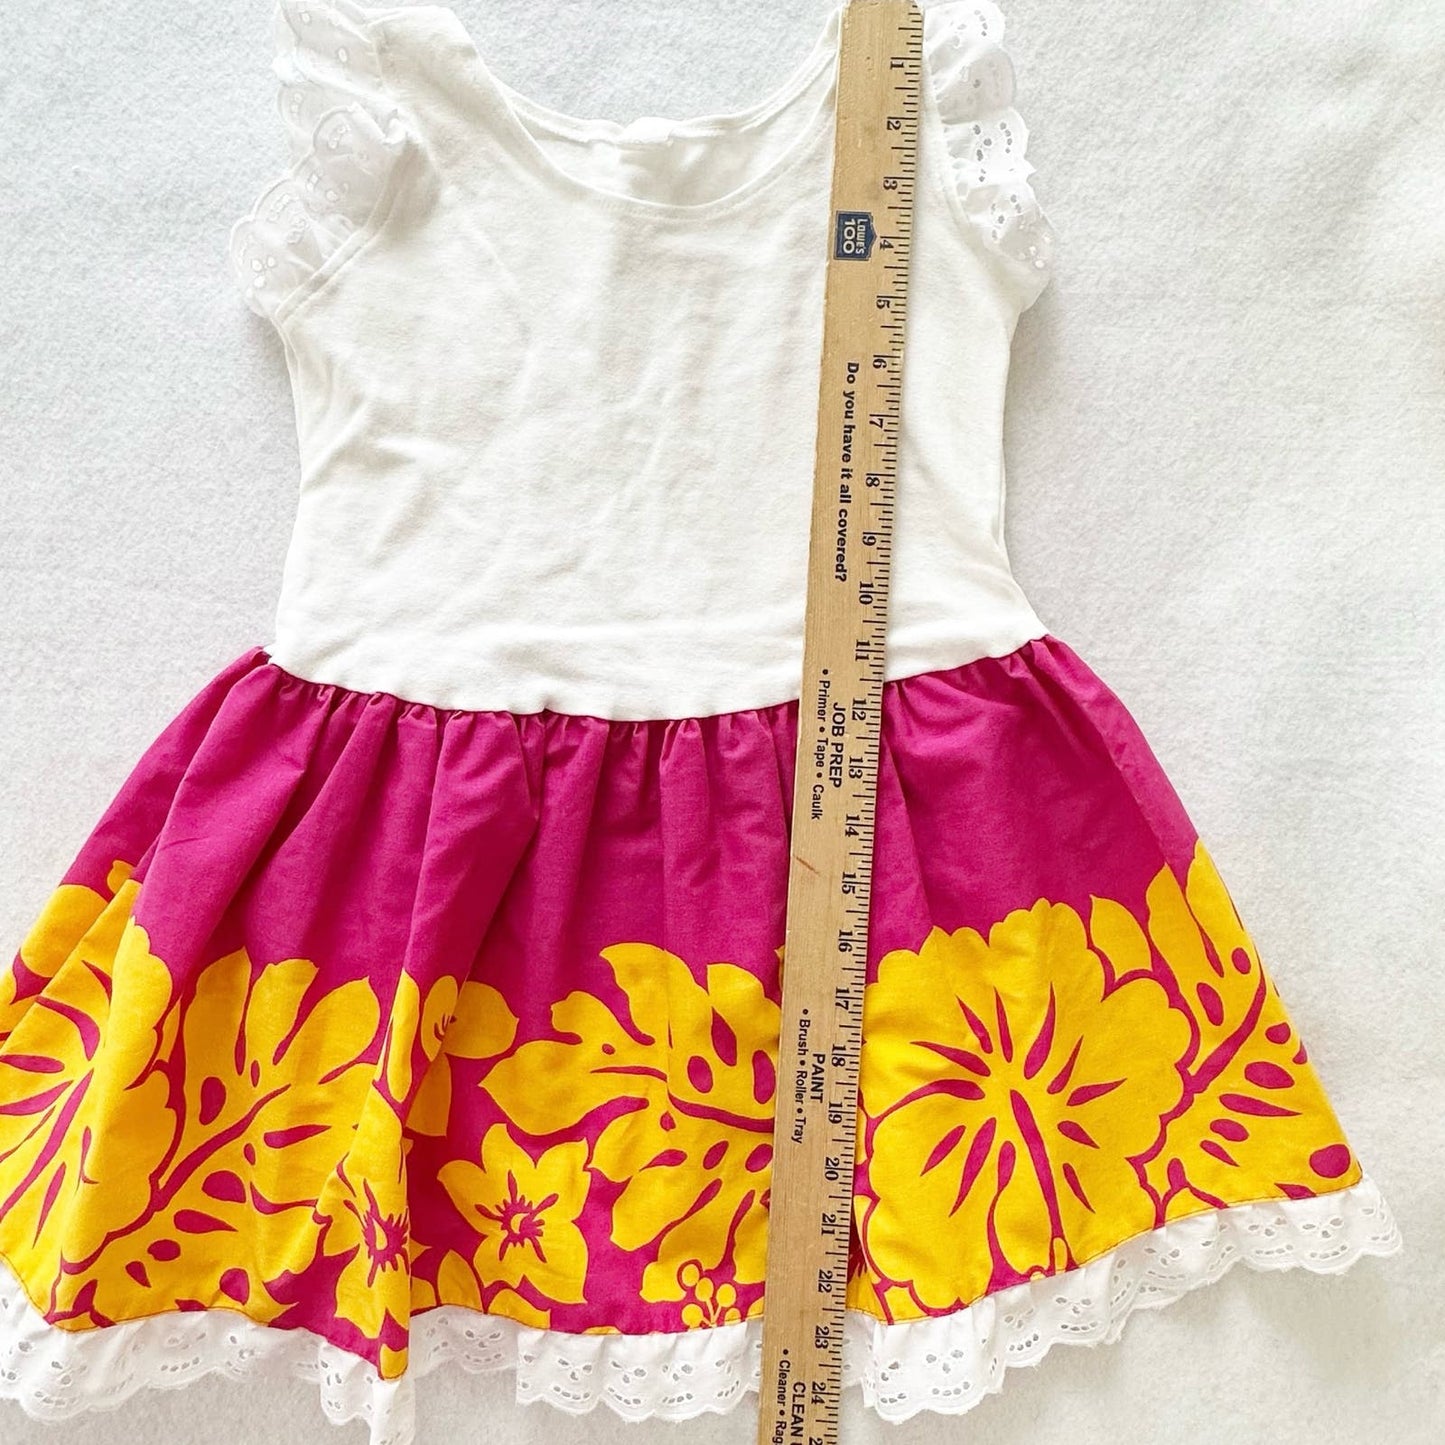 Vintage Hawaiian Print Pink and Yellow Floral Dress: 7y